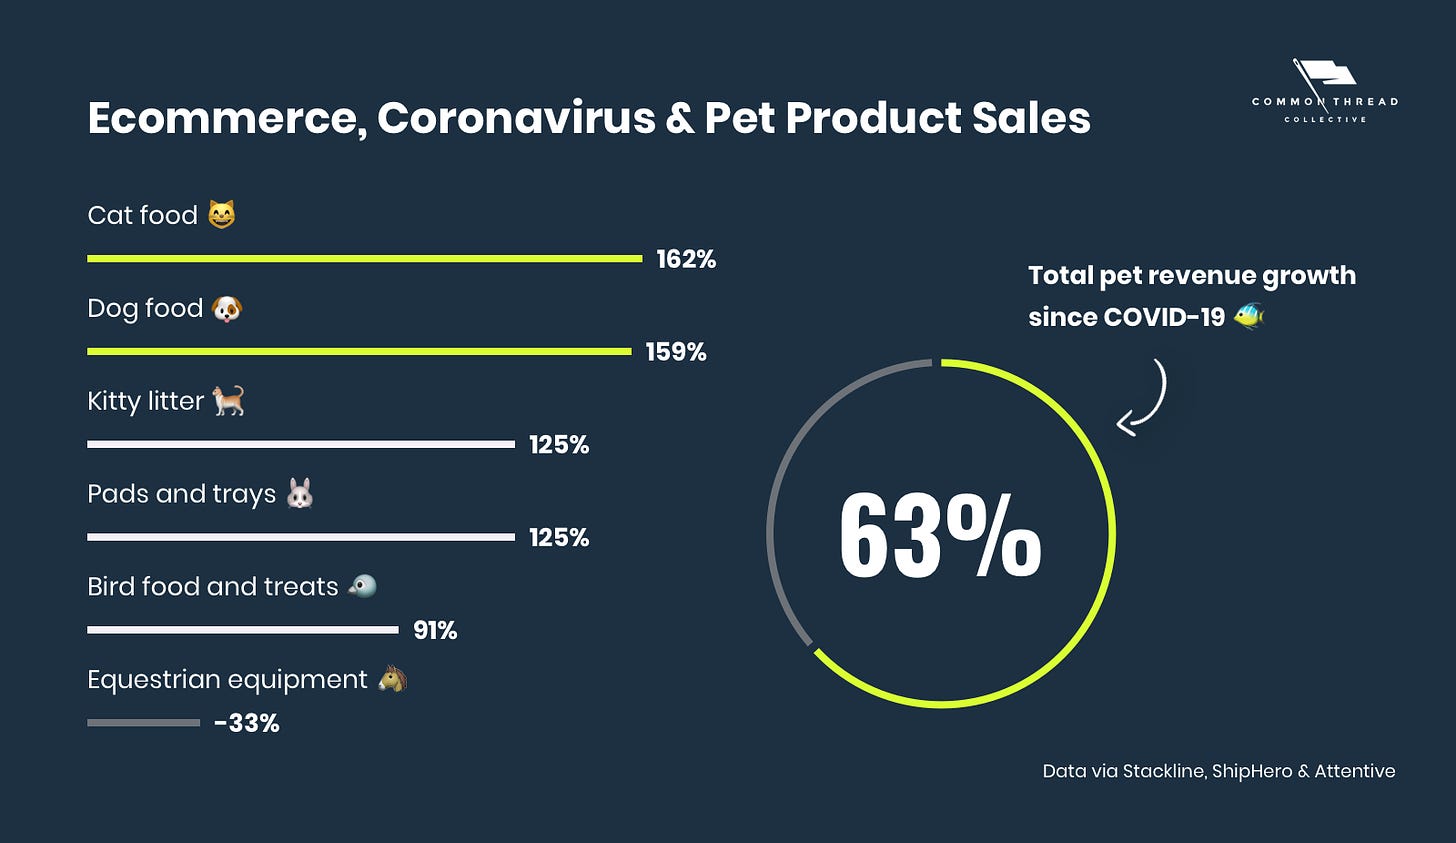 Ecommerce, Pet Product Sales & Coronavirus